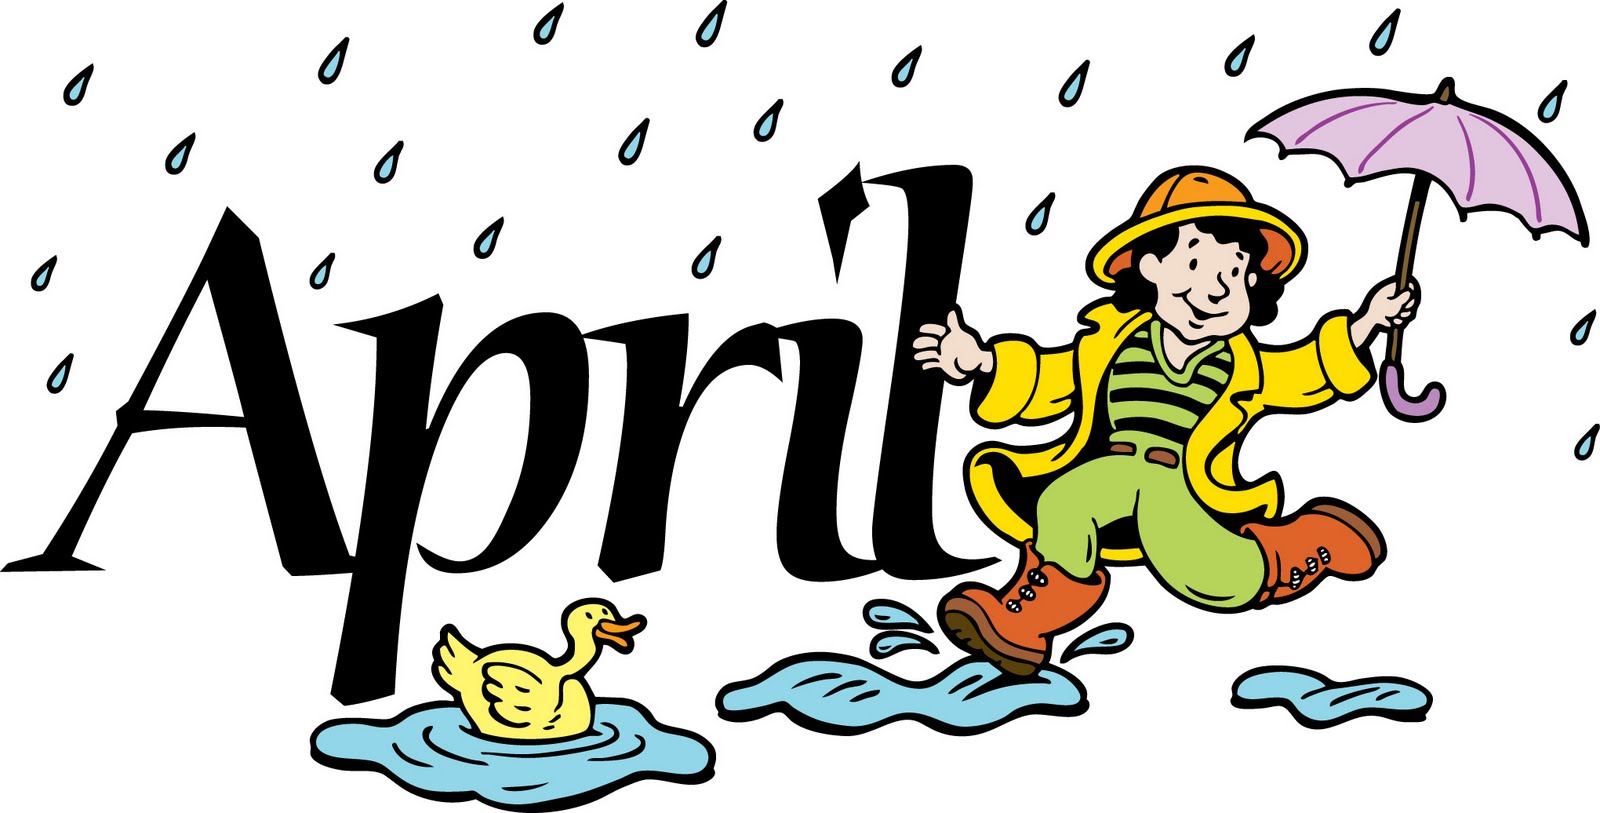 Free month of april clip art clipart image